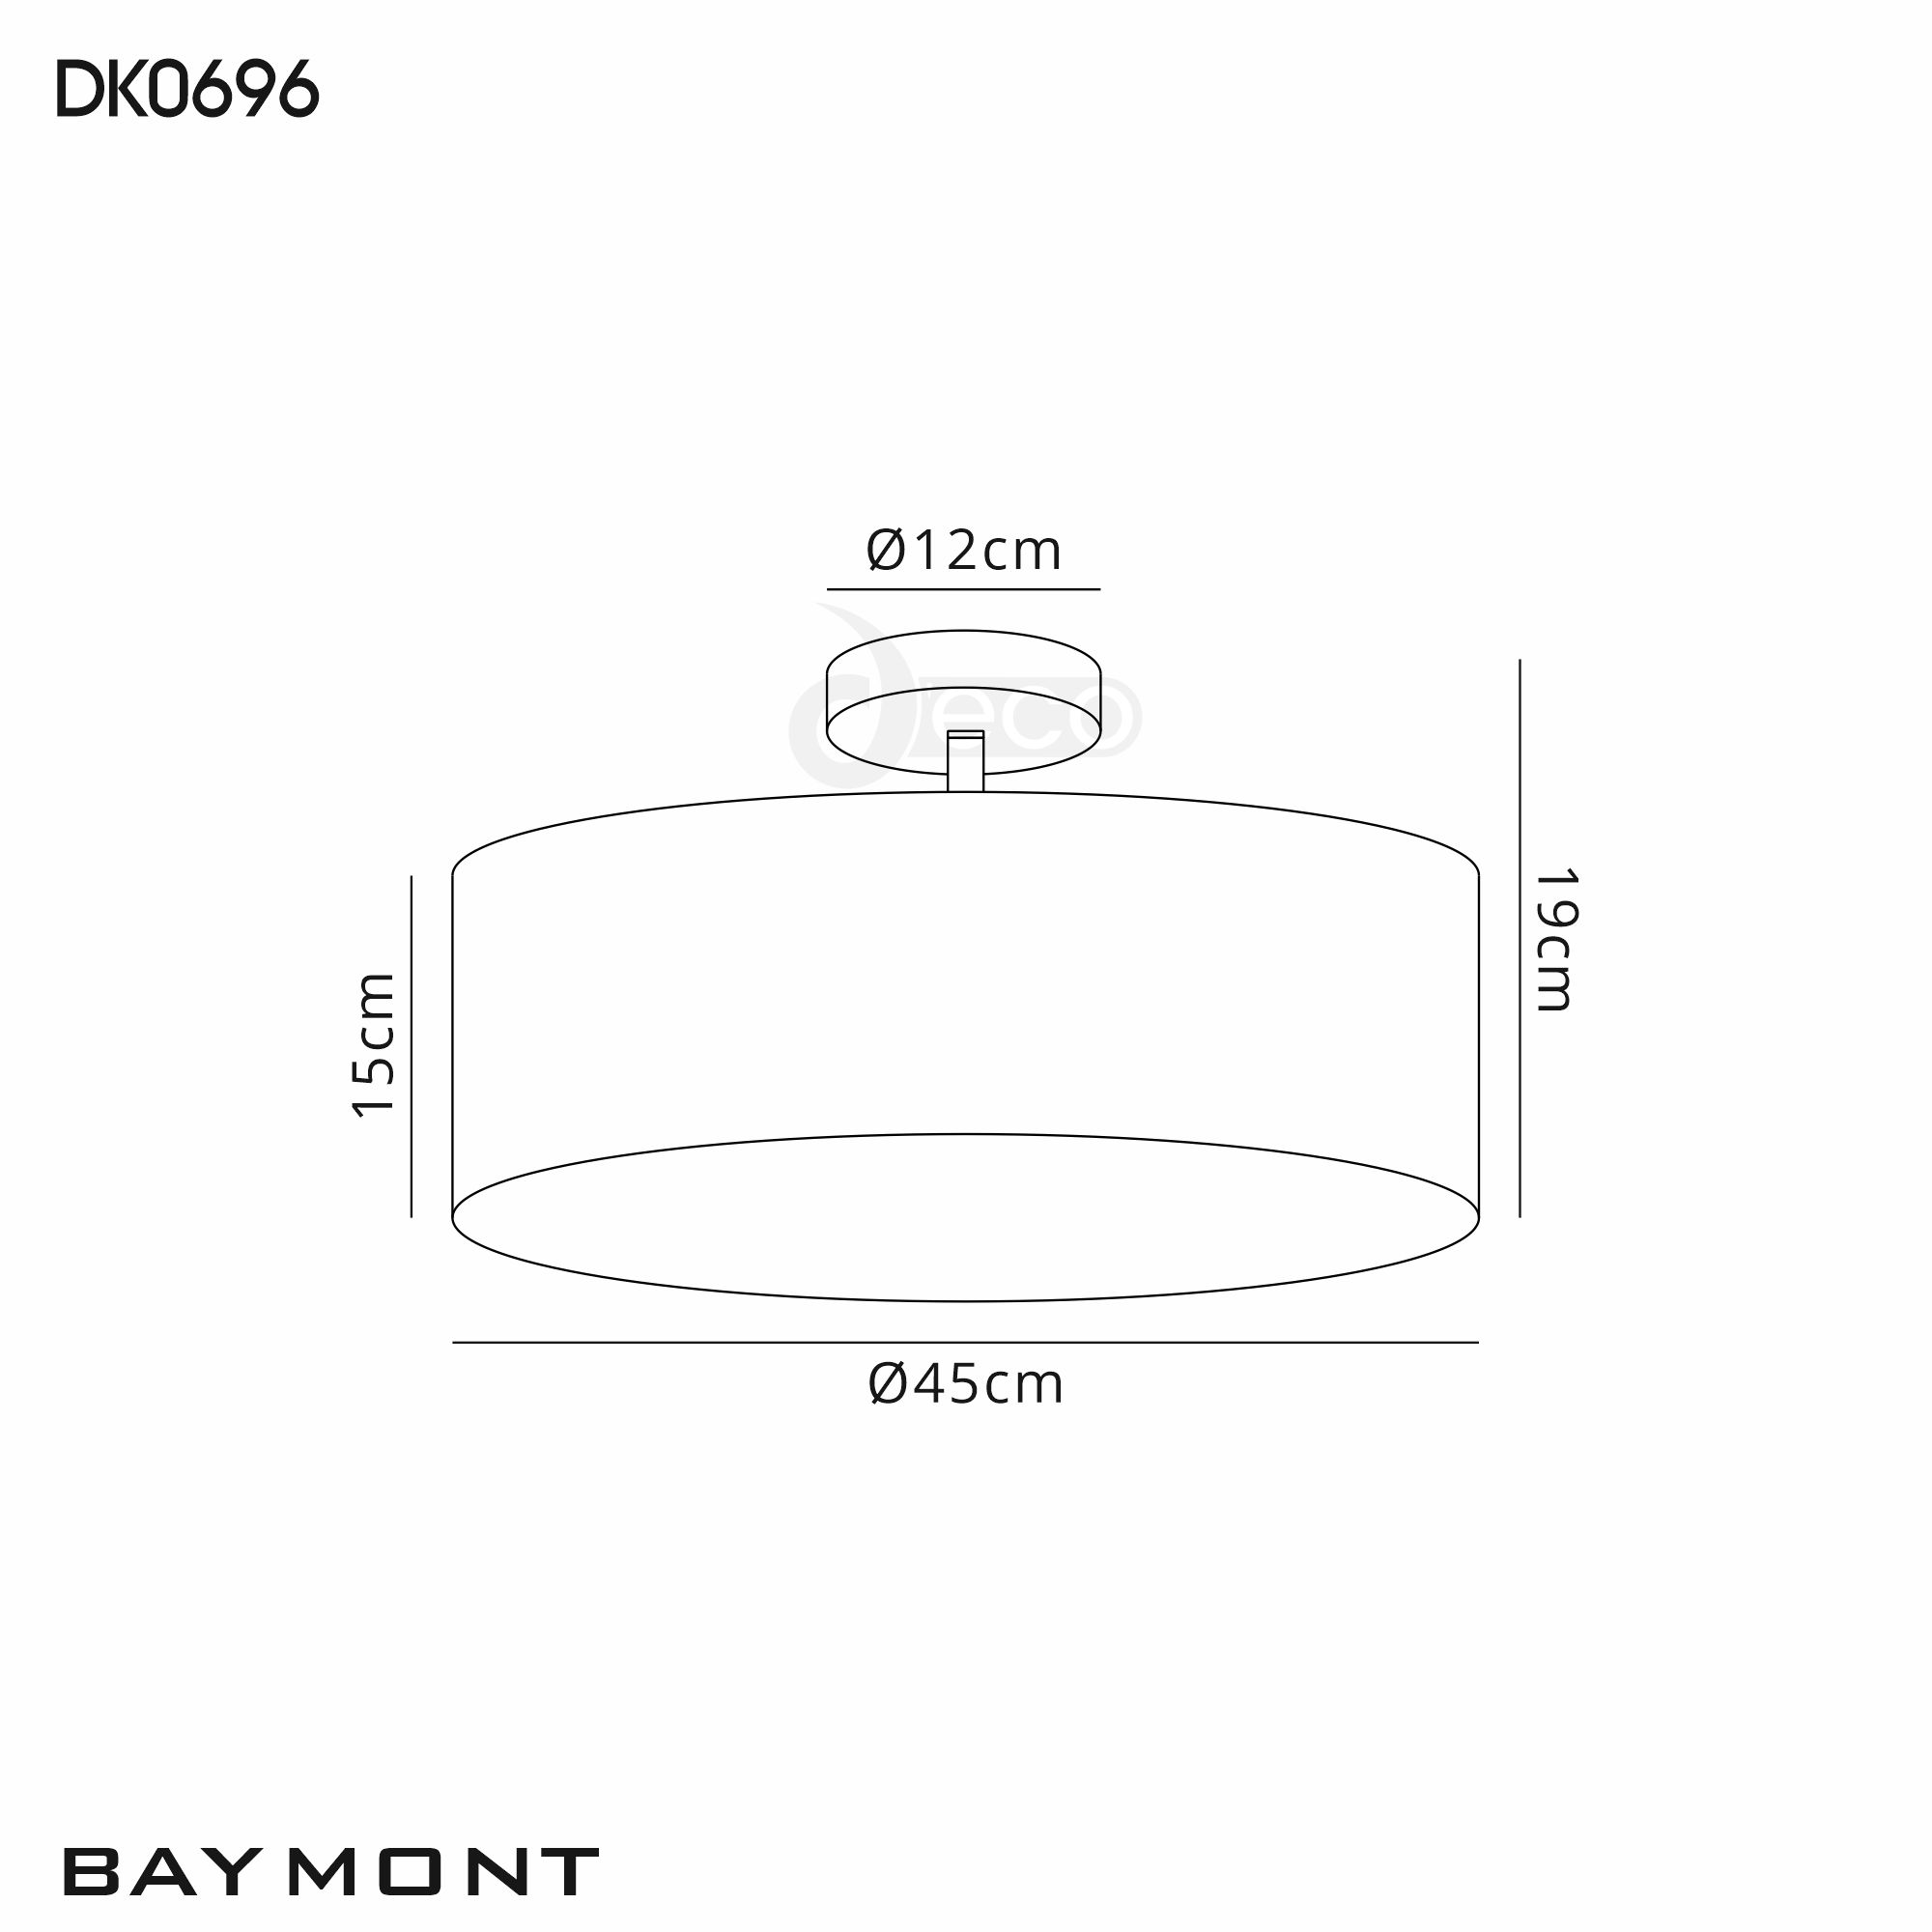 DK0696  Baymont 45cm, Semi Flush 3 Light Polished Chrome, Grey/White